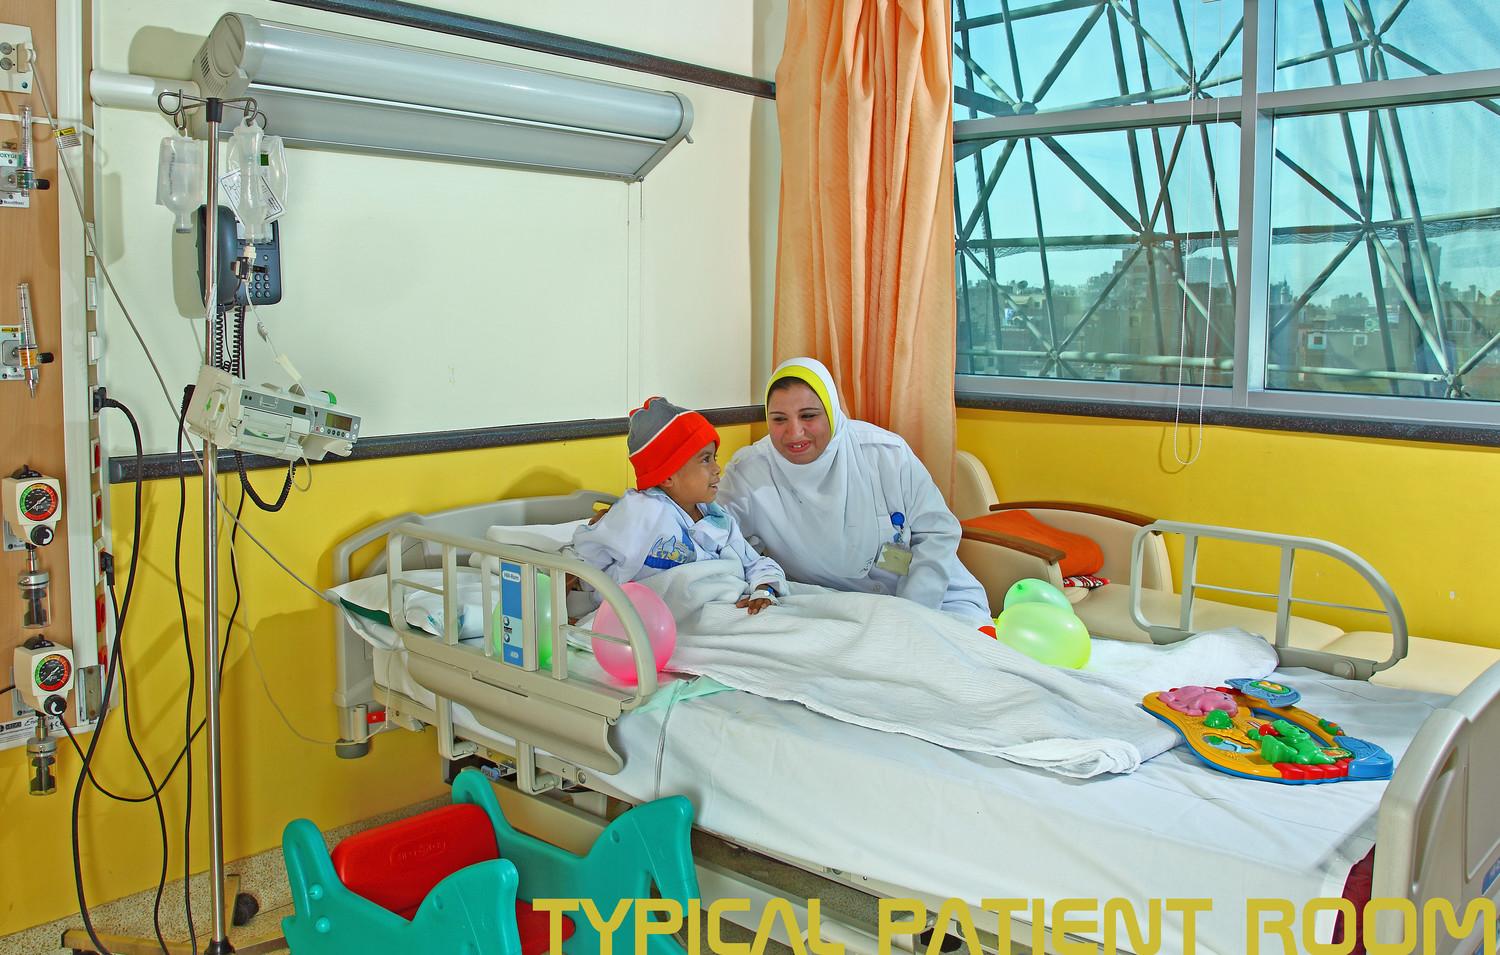 Typical patient room